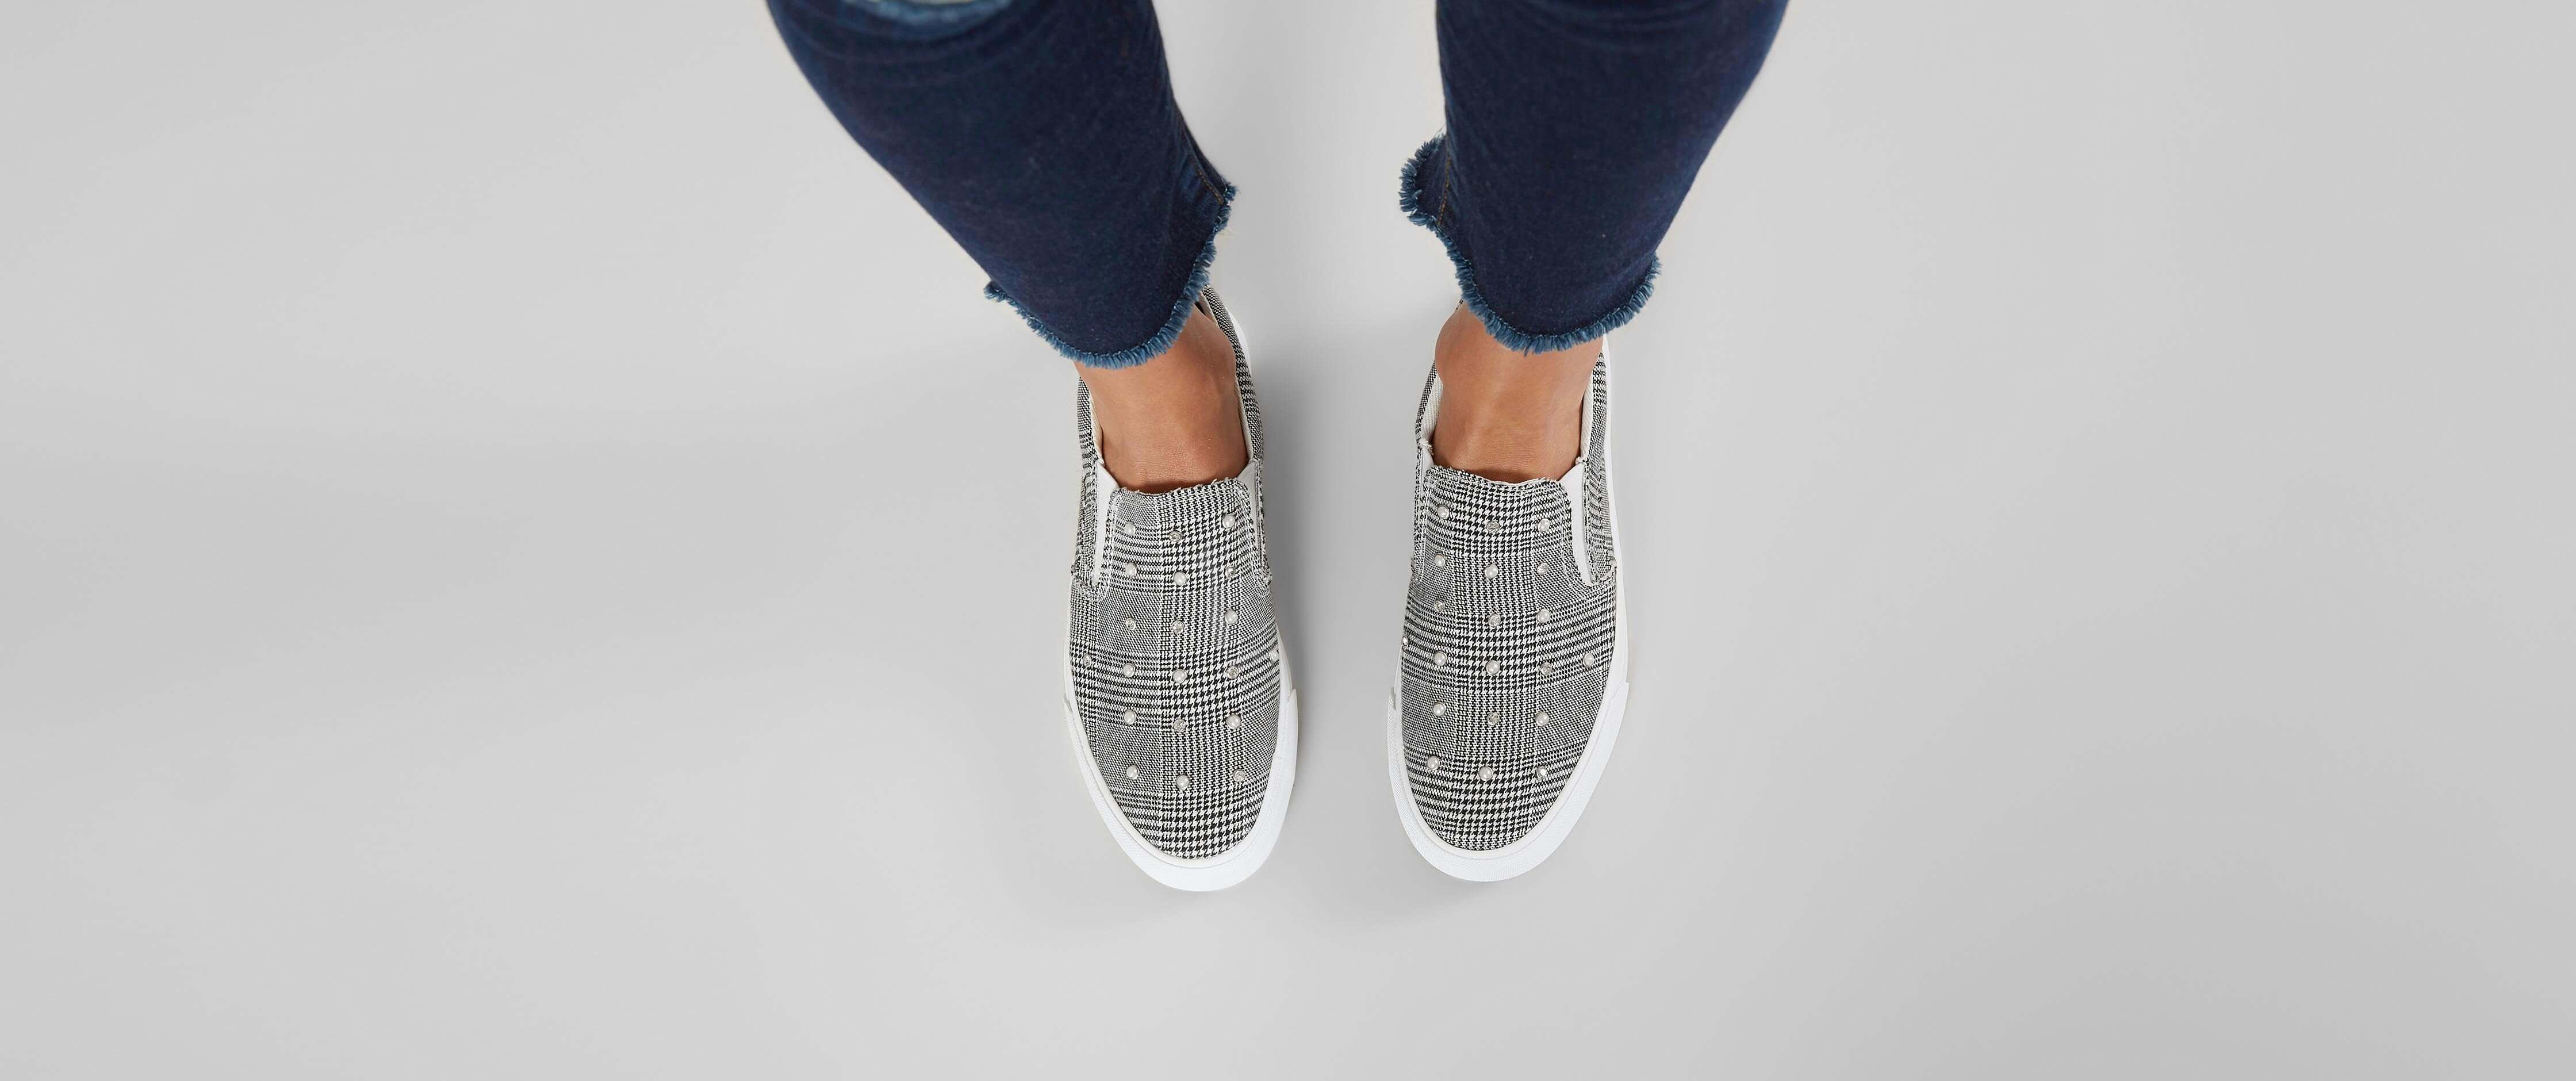 Blowfish Madios Shoe - Women's Shoes in 